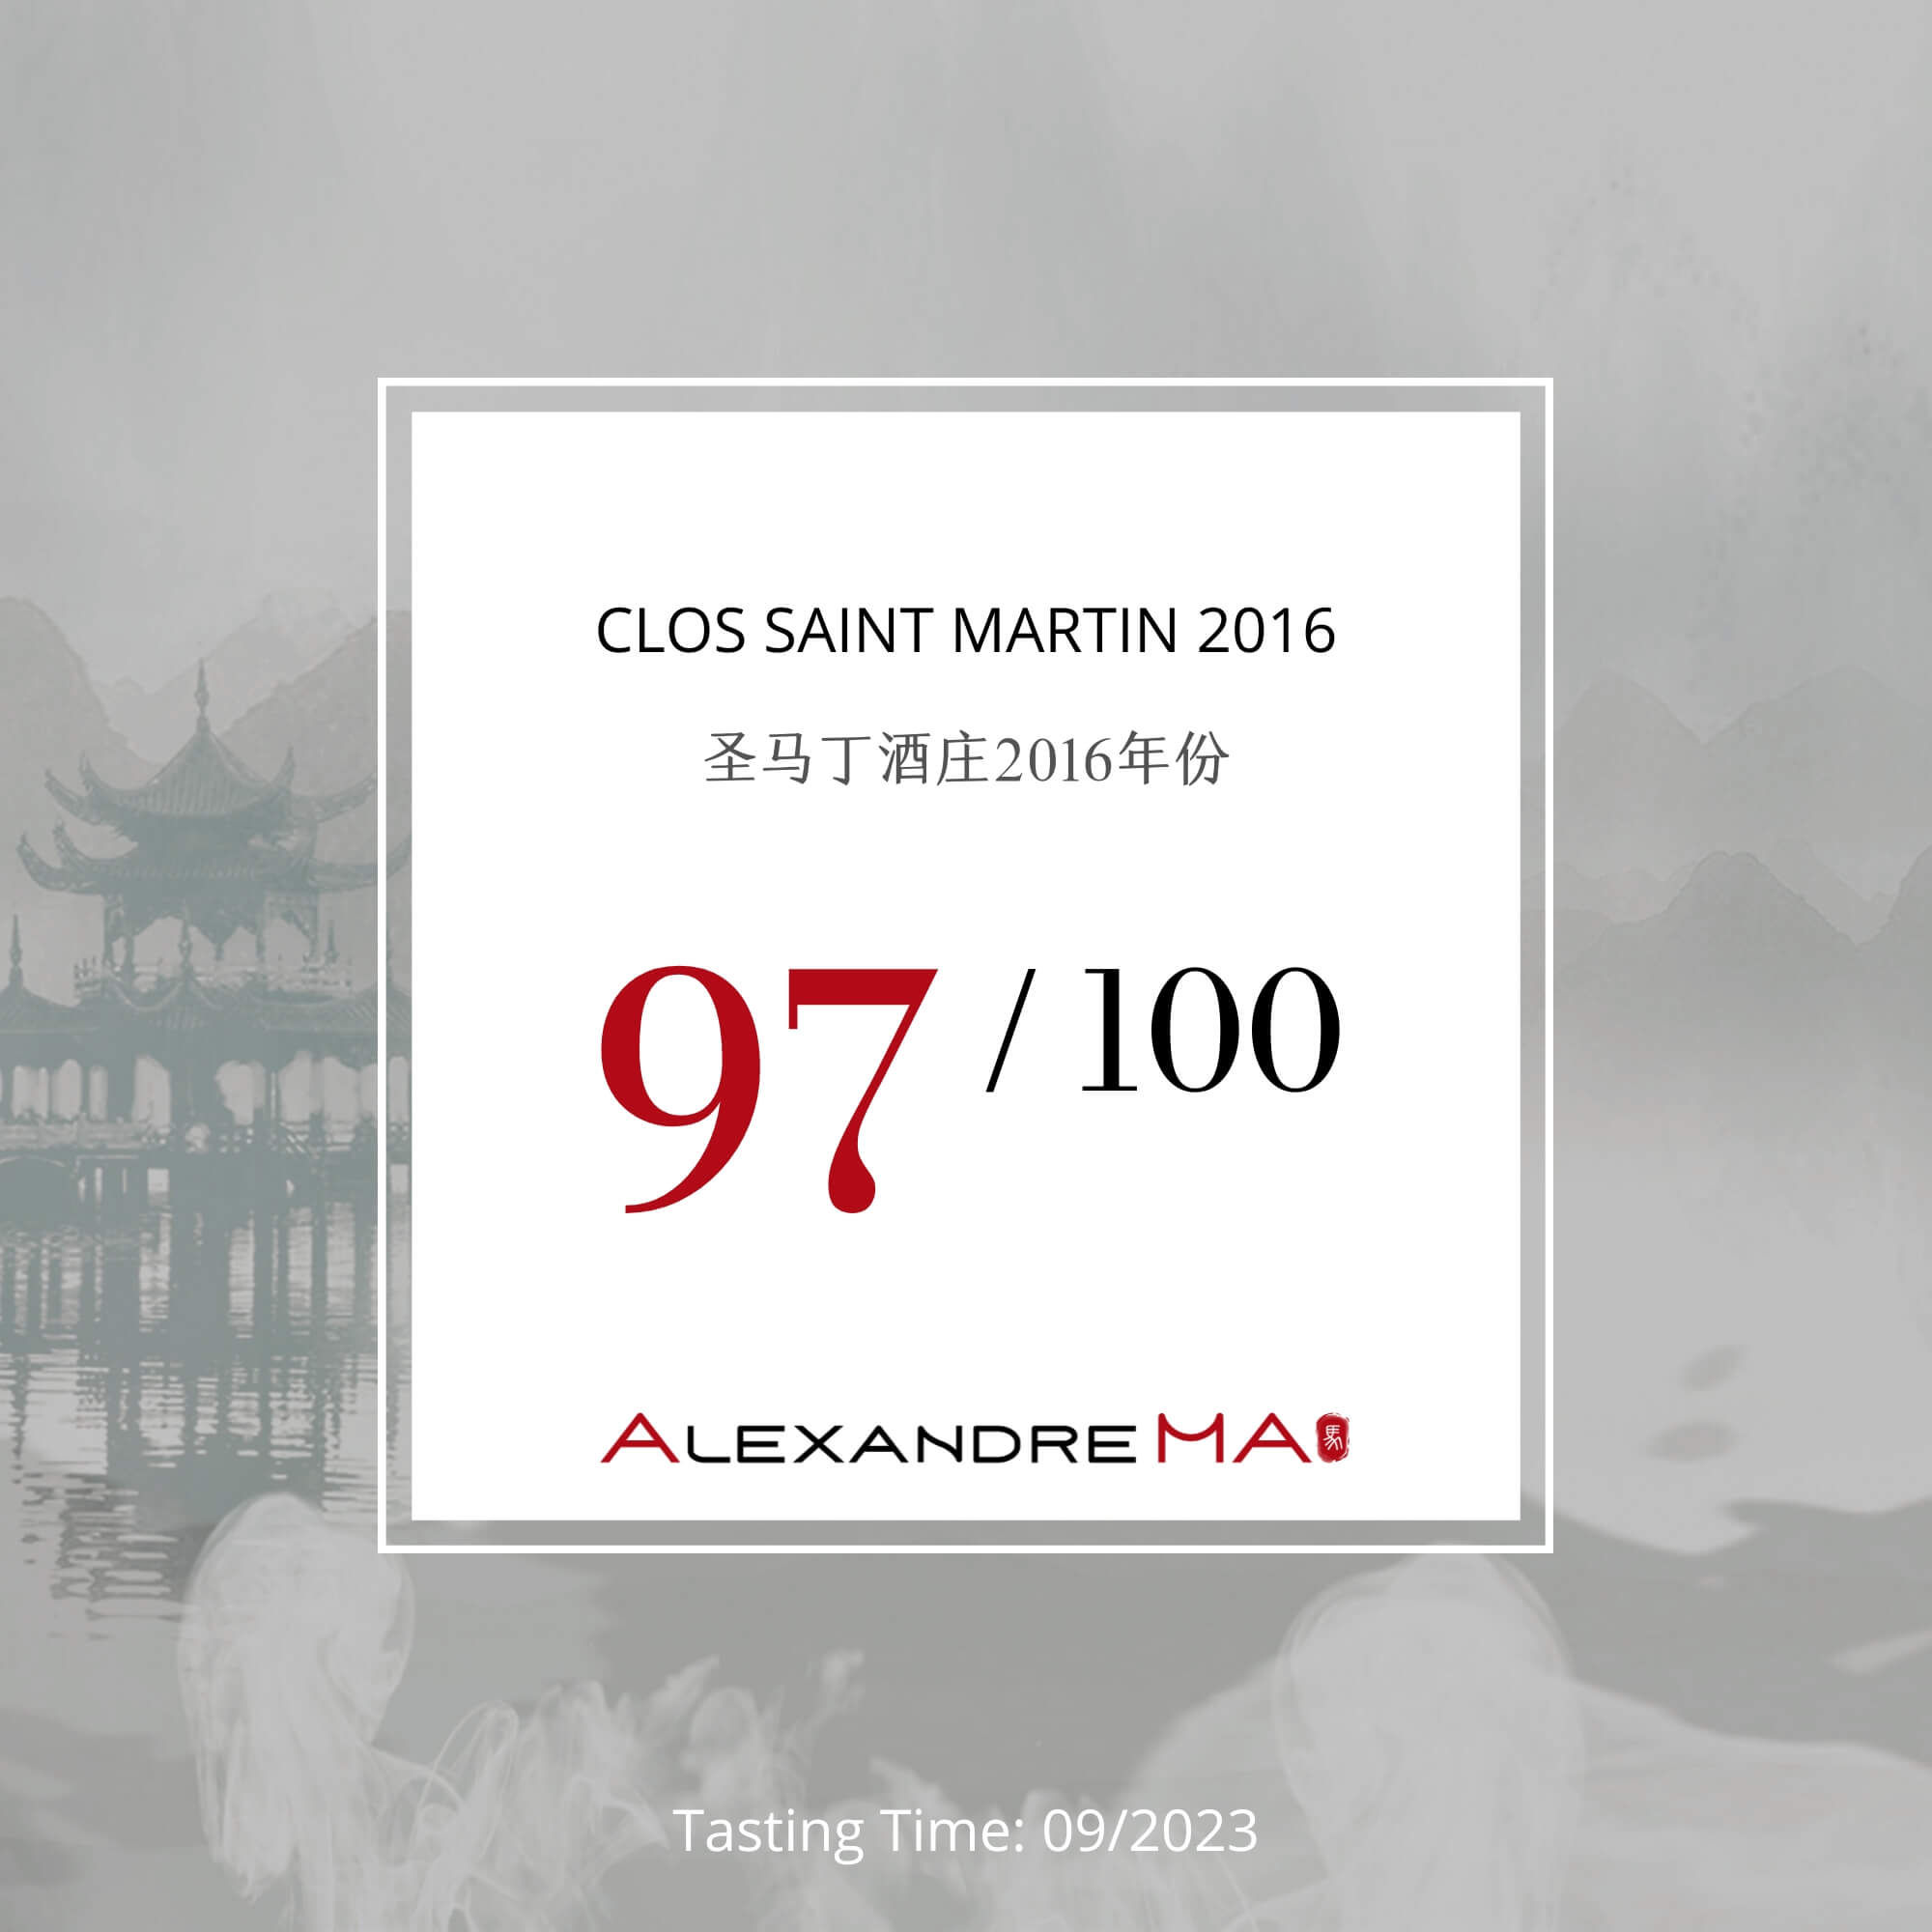 Clos Saint Martin 2016 - Alexandre MA